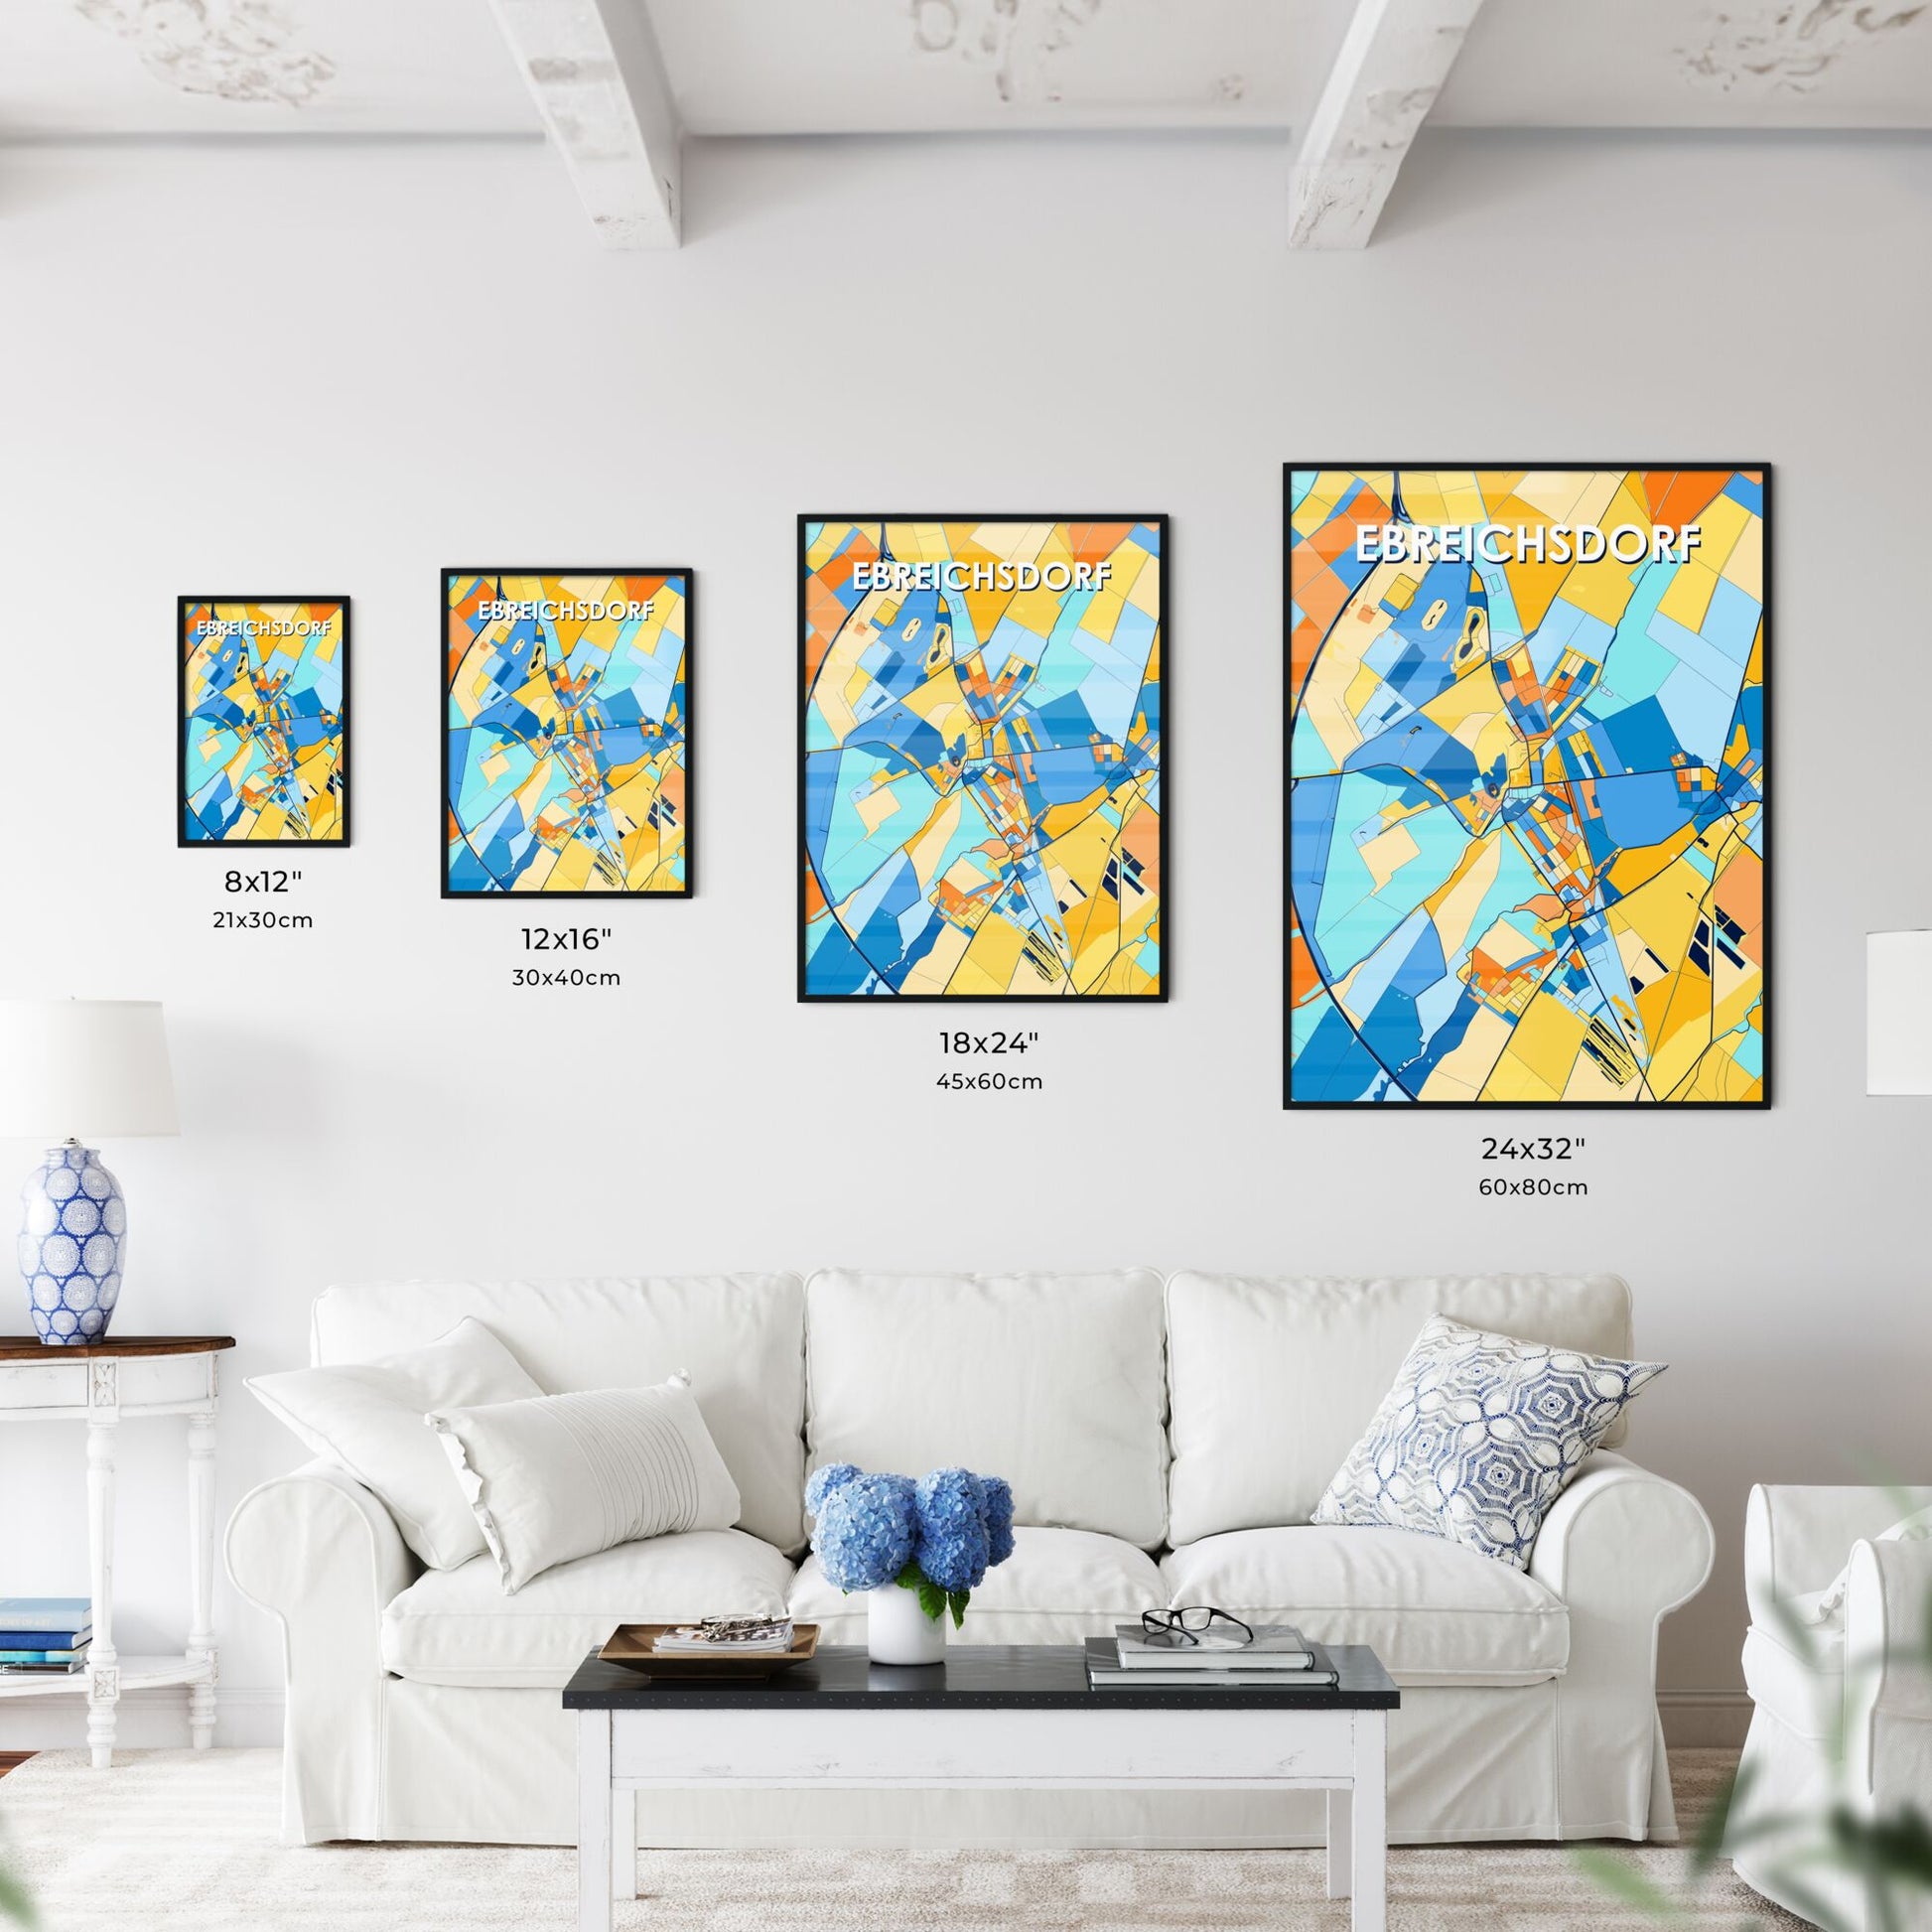 EBREICHSDORF AUSTRIA Vibrant Colorful Art Map Poster Blue Orange